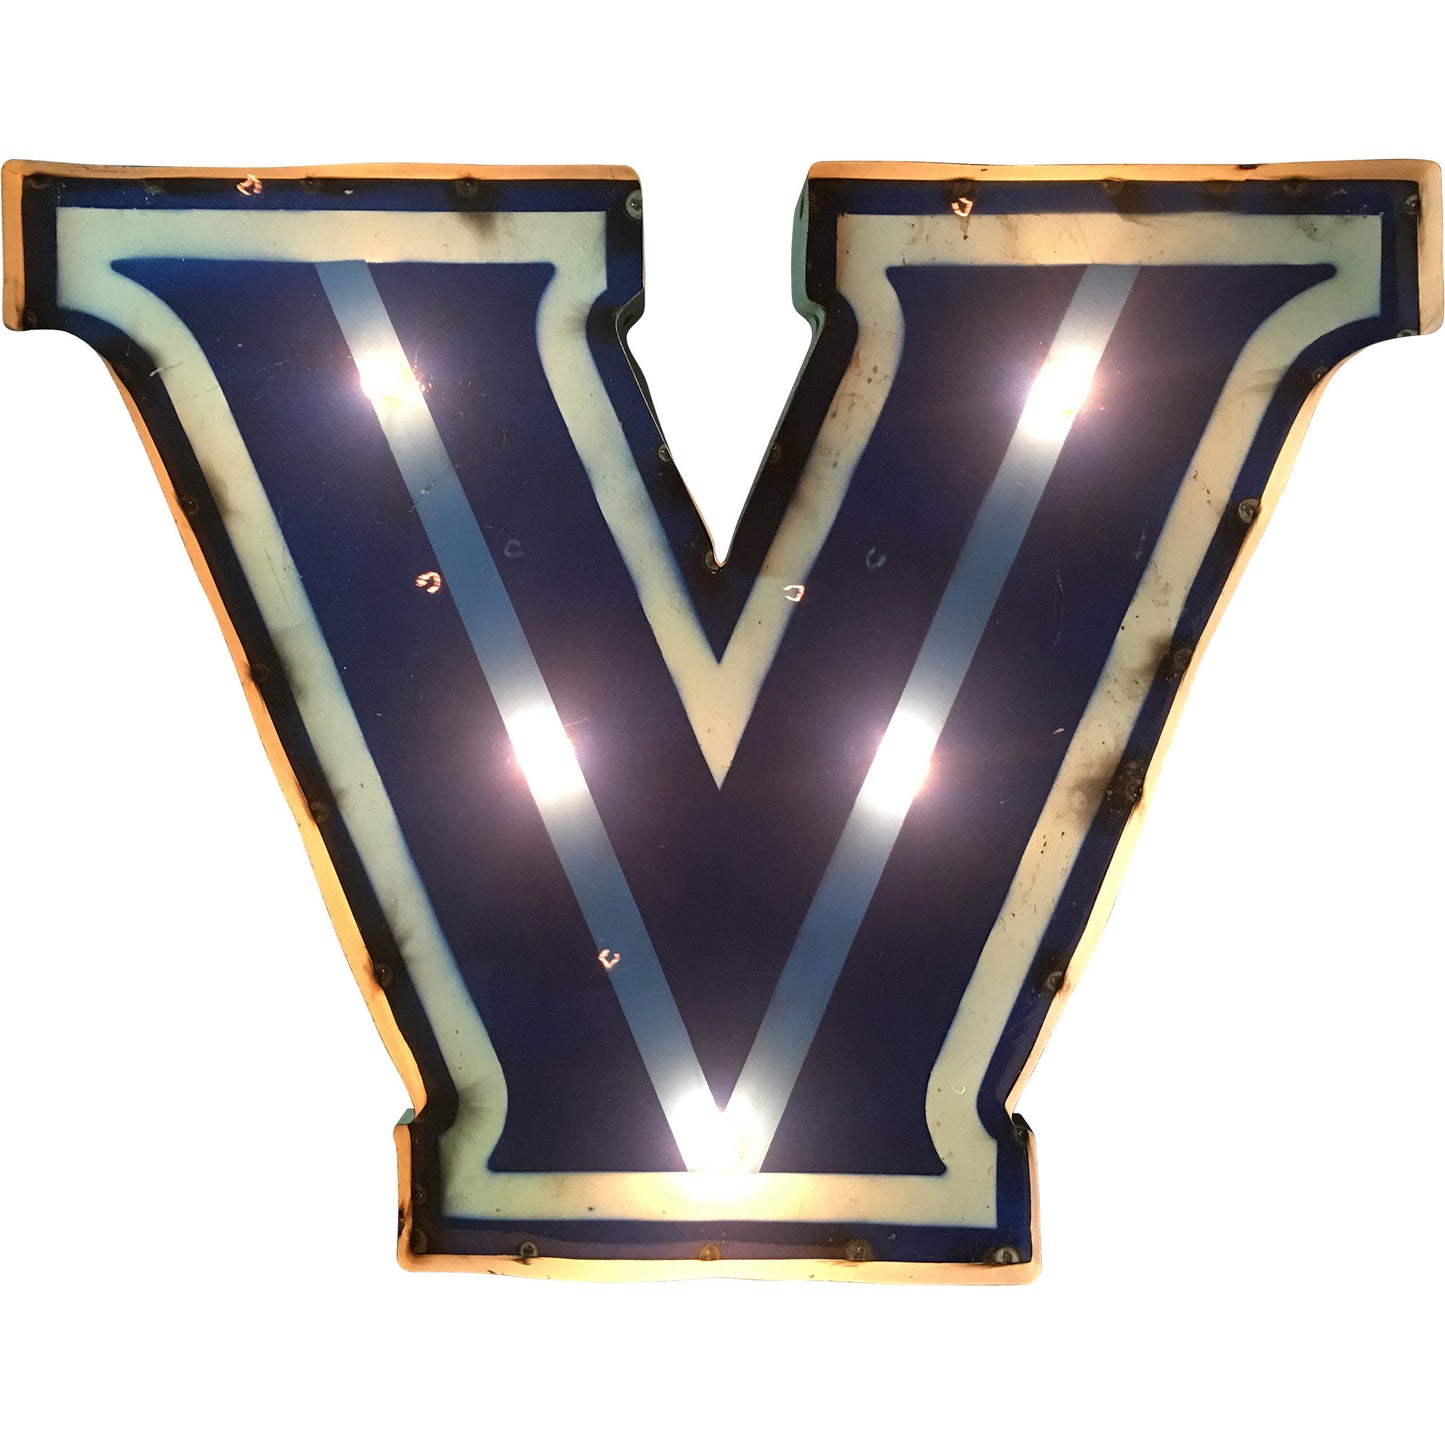 Villanova University "V" Logo Lighted Recycled Metal Wall Decor